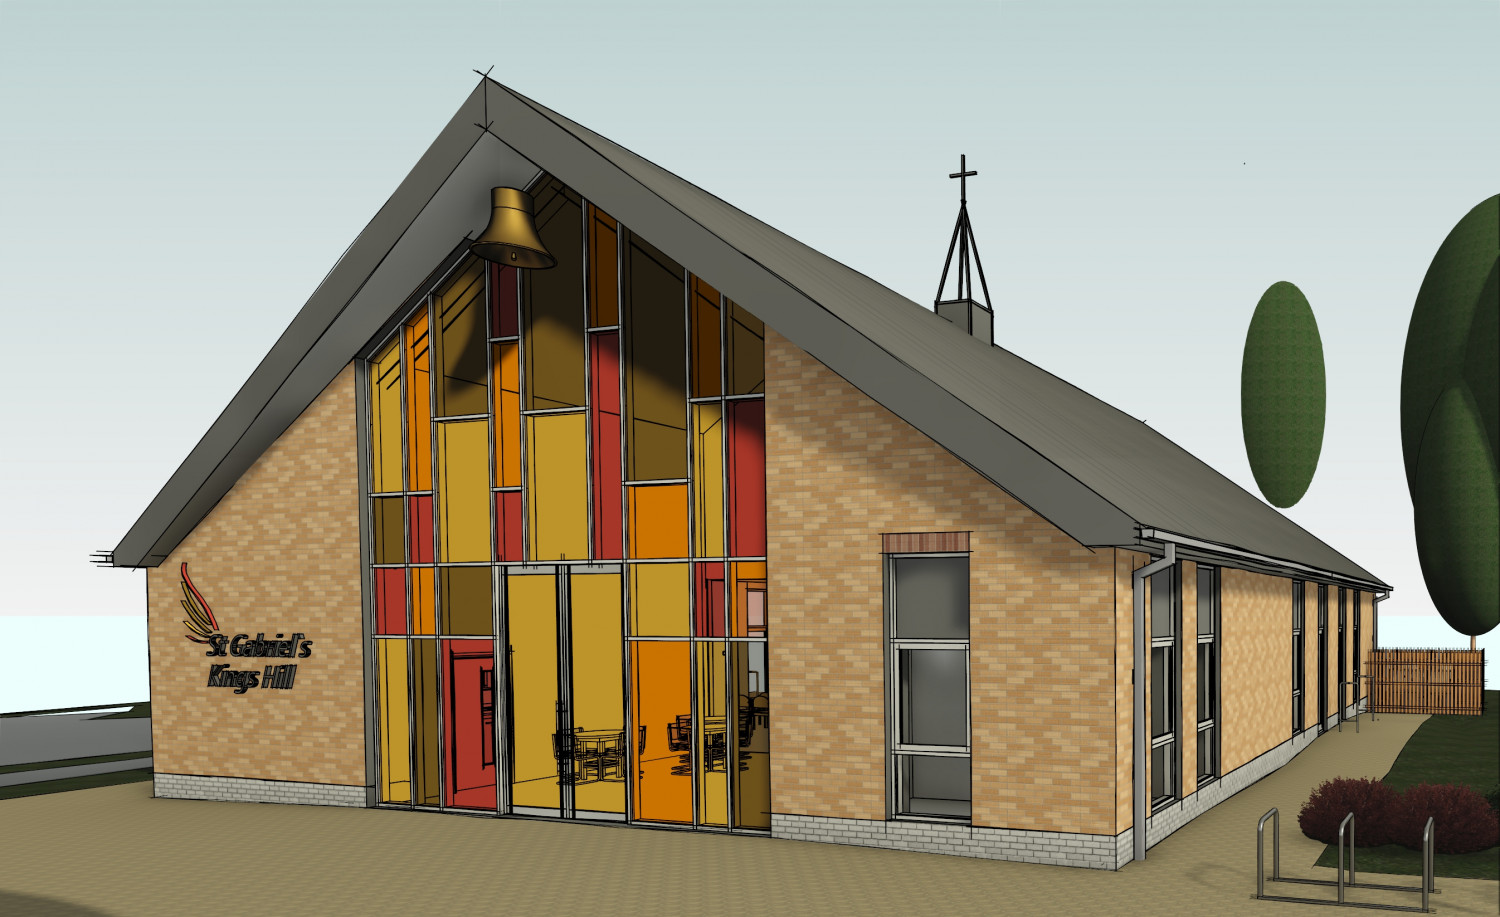 An artist's impression of the new St Gabriel's Church